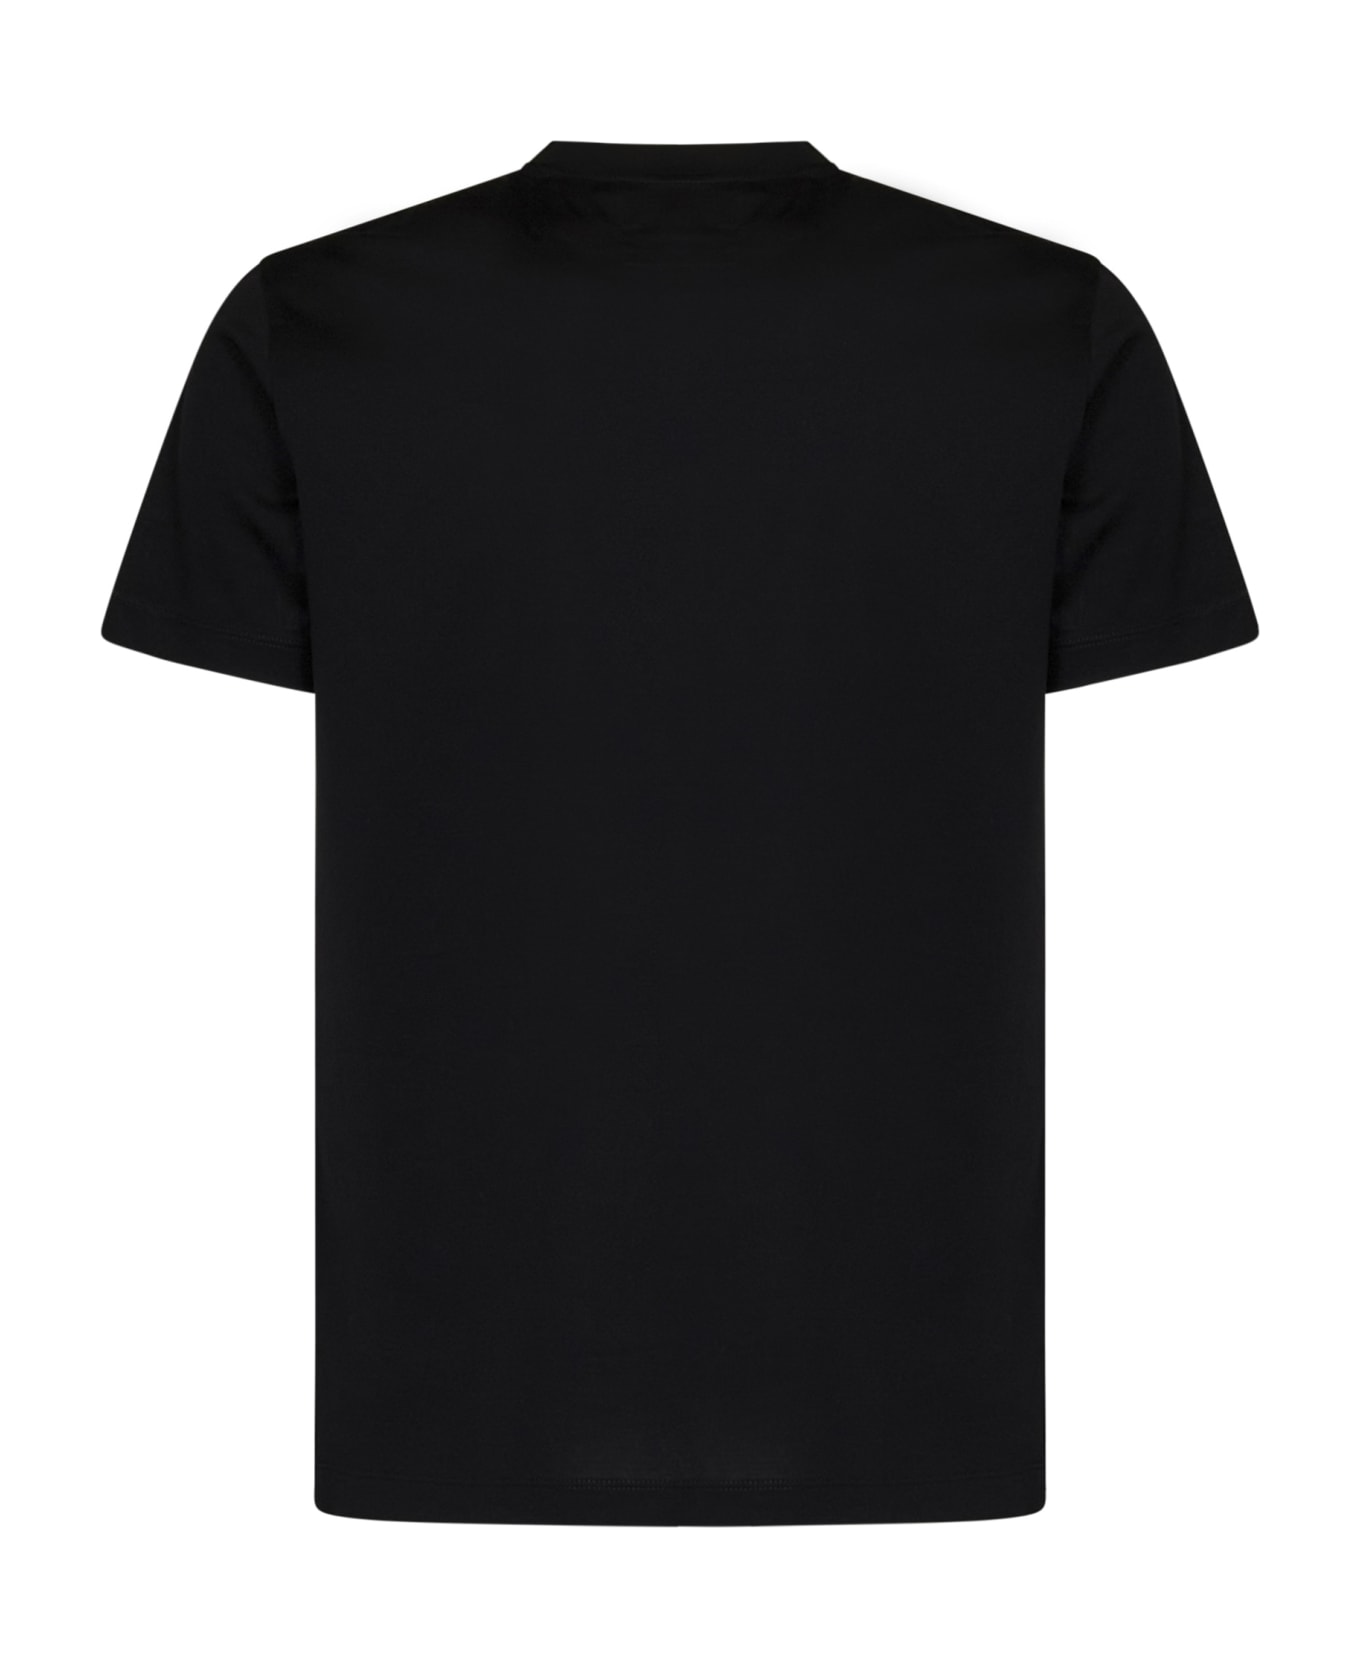 Emporio Armani T-shirt - Black